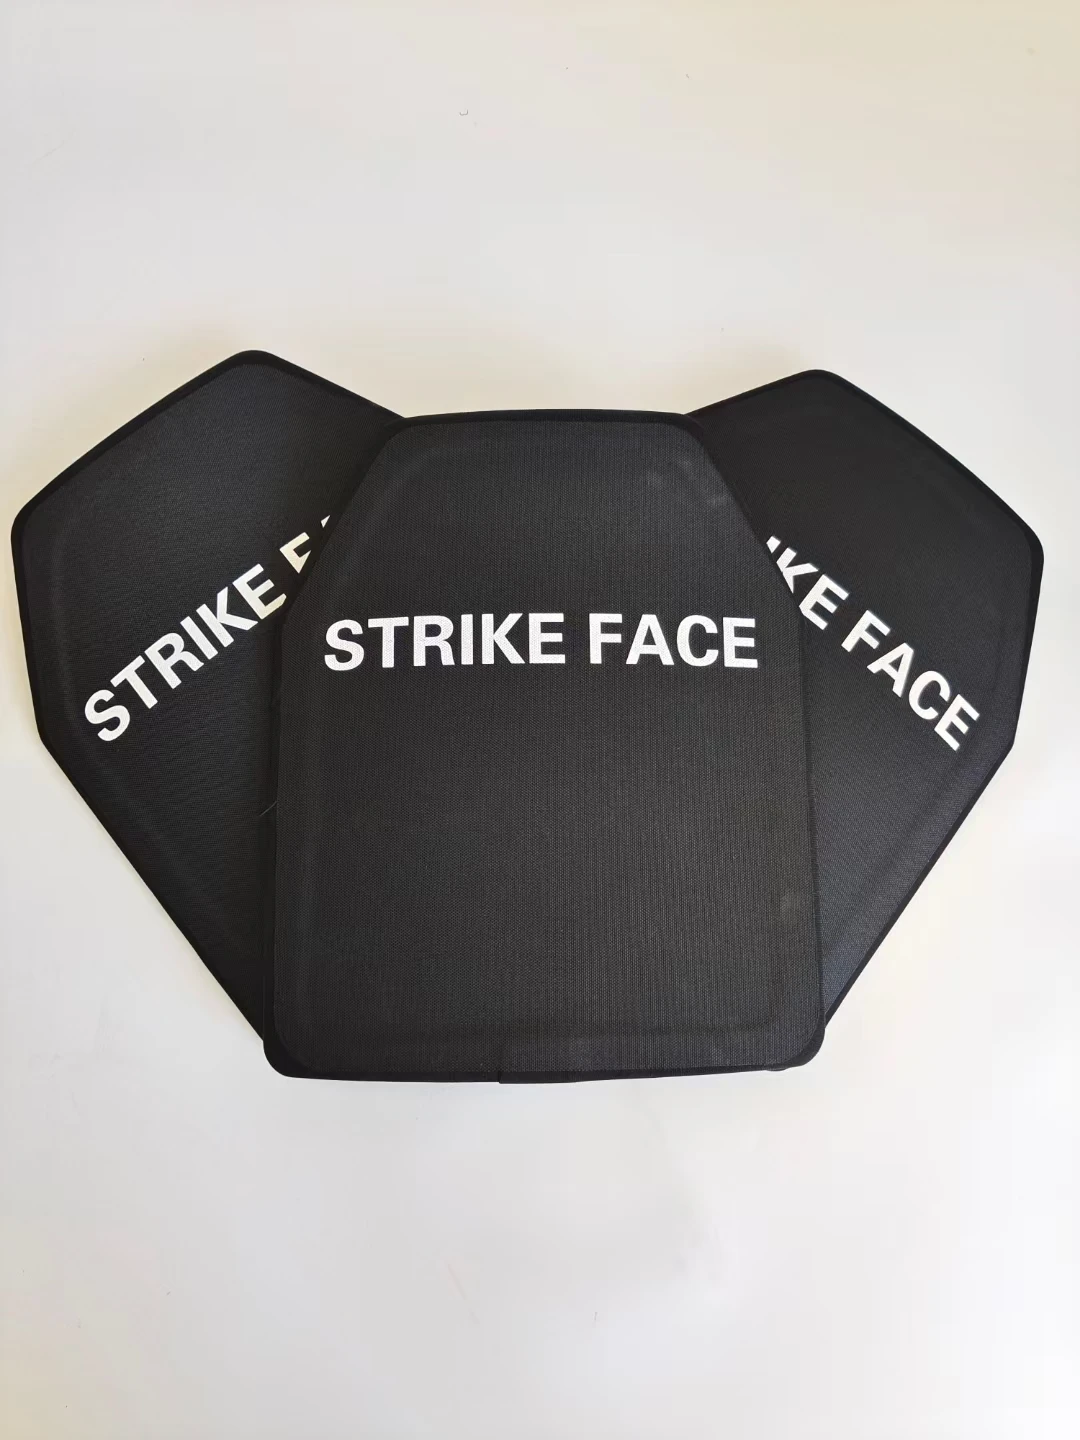 

Nij IIIA Bulletproof Plate Tactical Vest PE Chest Plate Military Equipment Defense Bullet Combat Bulletproof Plate